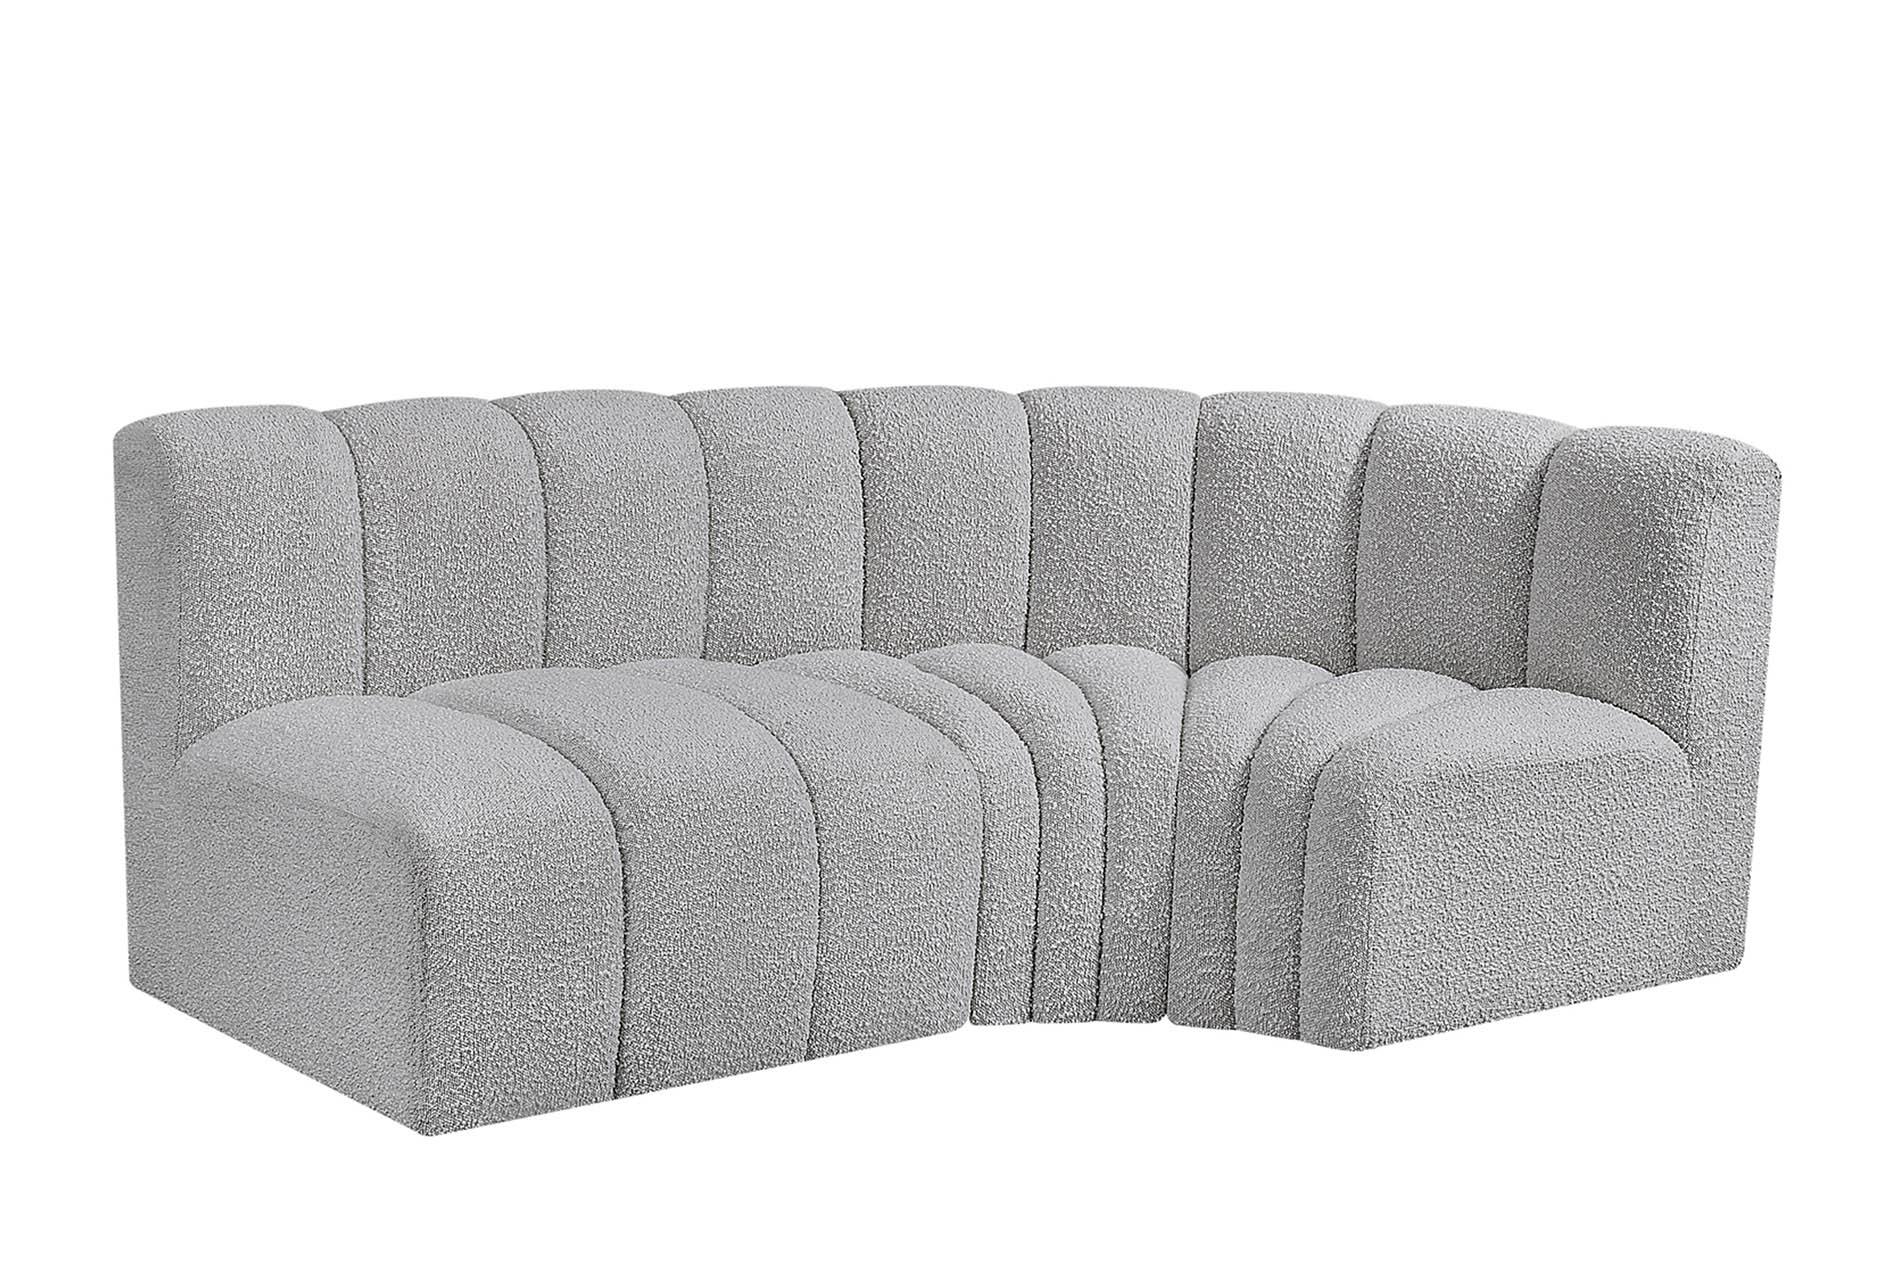 Contemporary, Modern Modular Sectional Sofa ARC 102Grey-S3A 102Grey-S3A in Gray 